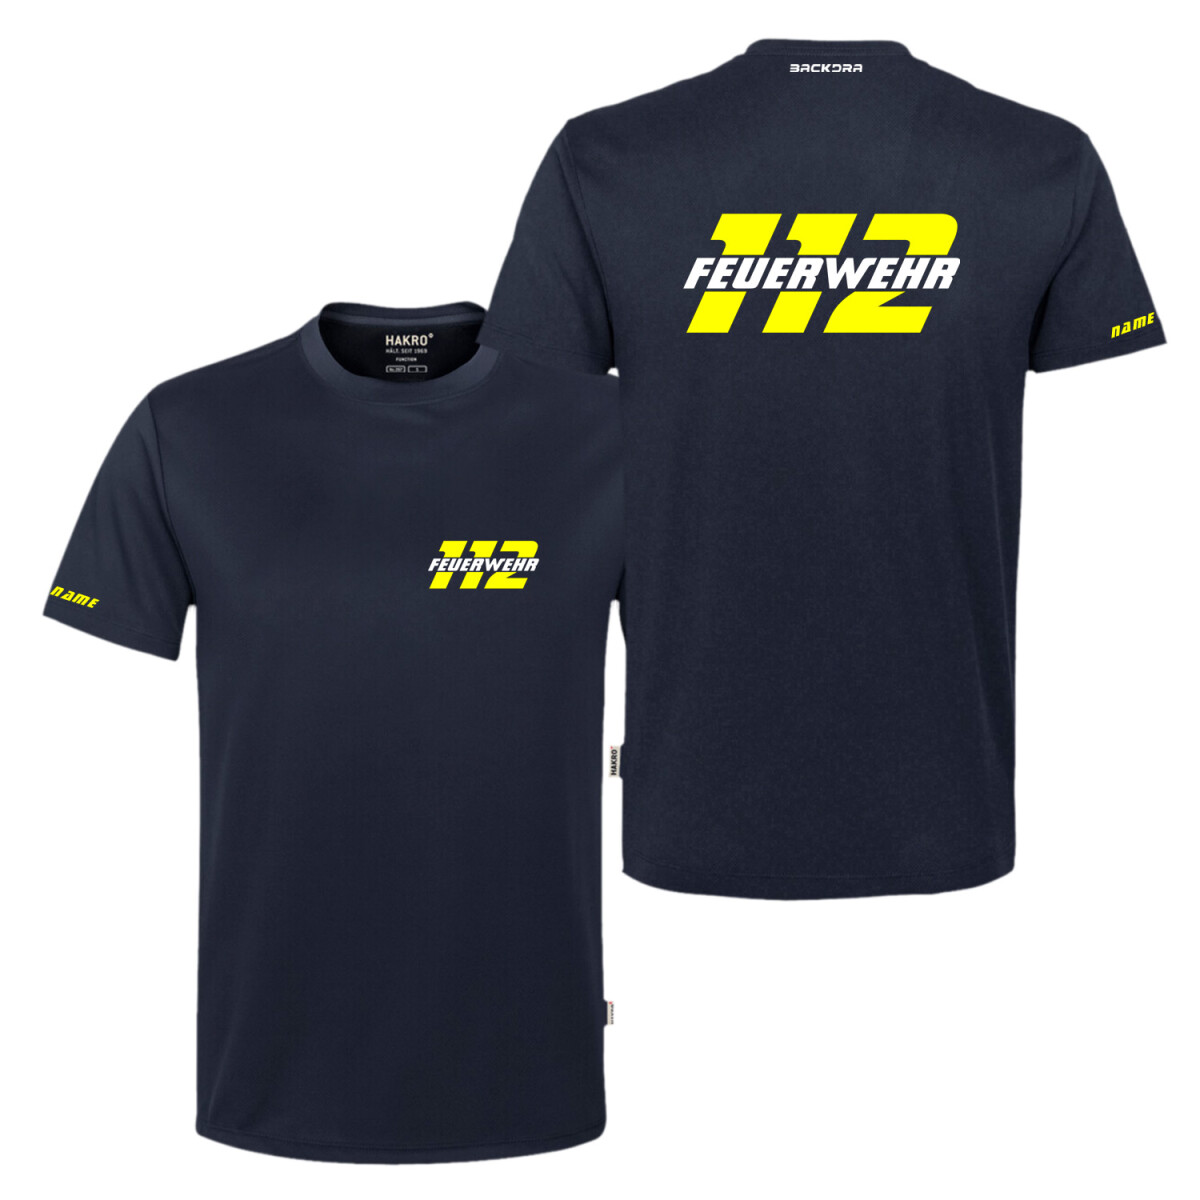 Funktions T-Shirt Männer | HAKRO 287 | Feuerwehr 112